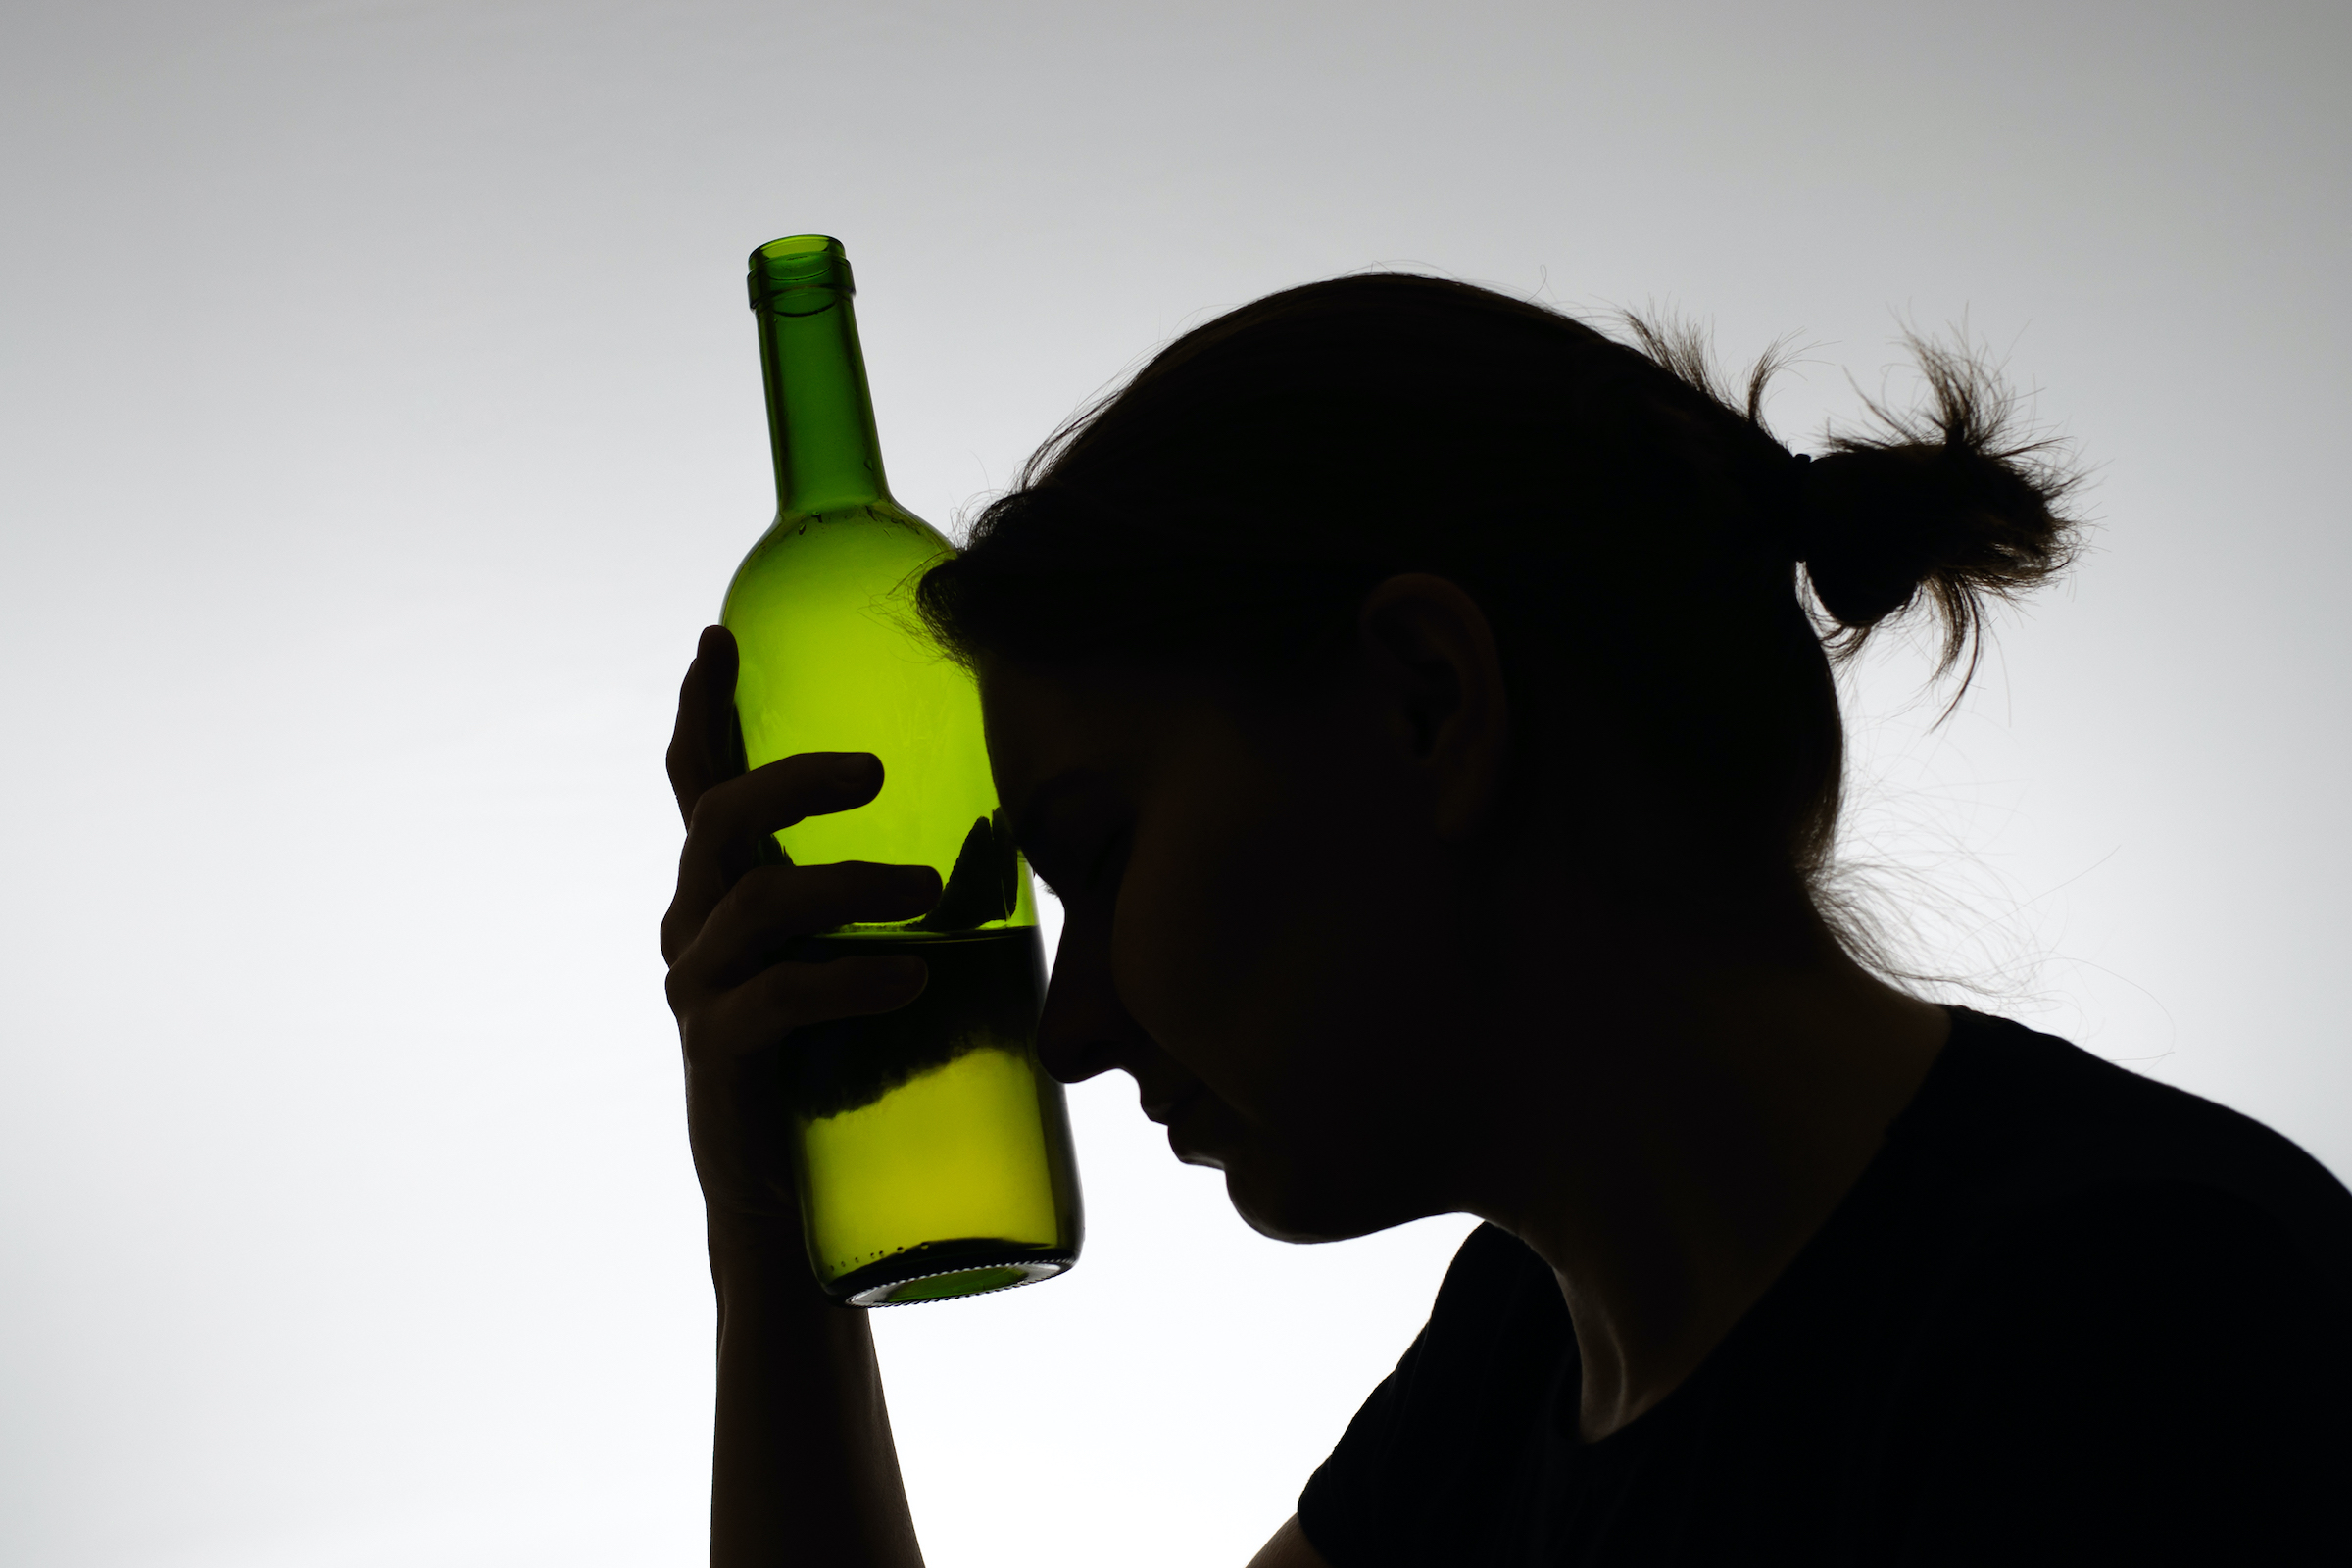 Women Drinking Alcohol